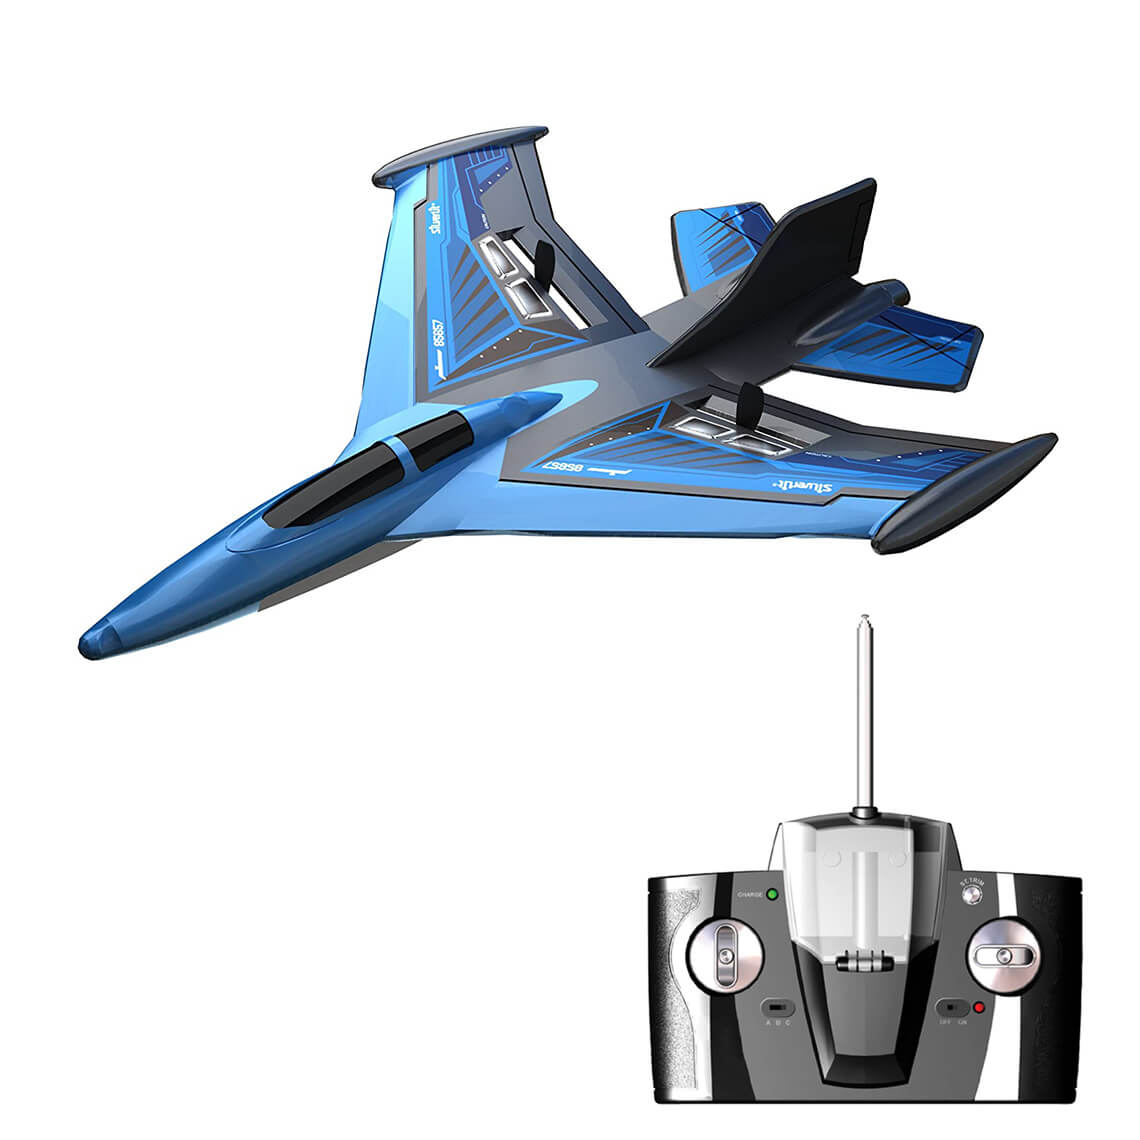 X-Twin Jet (Discontinued)